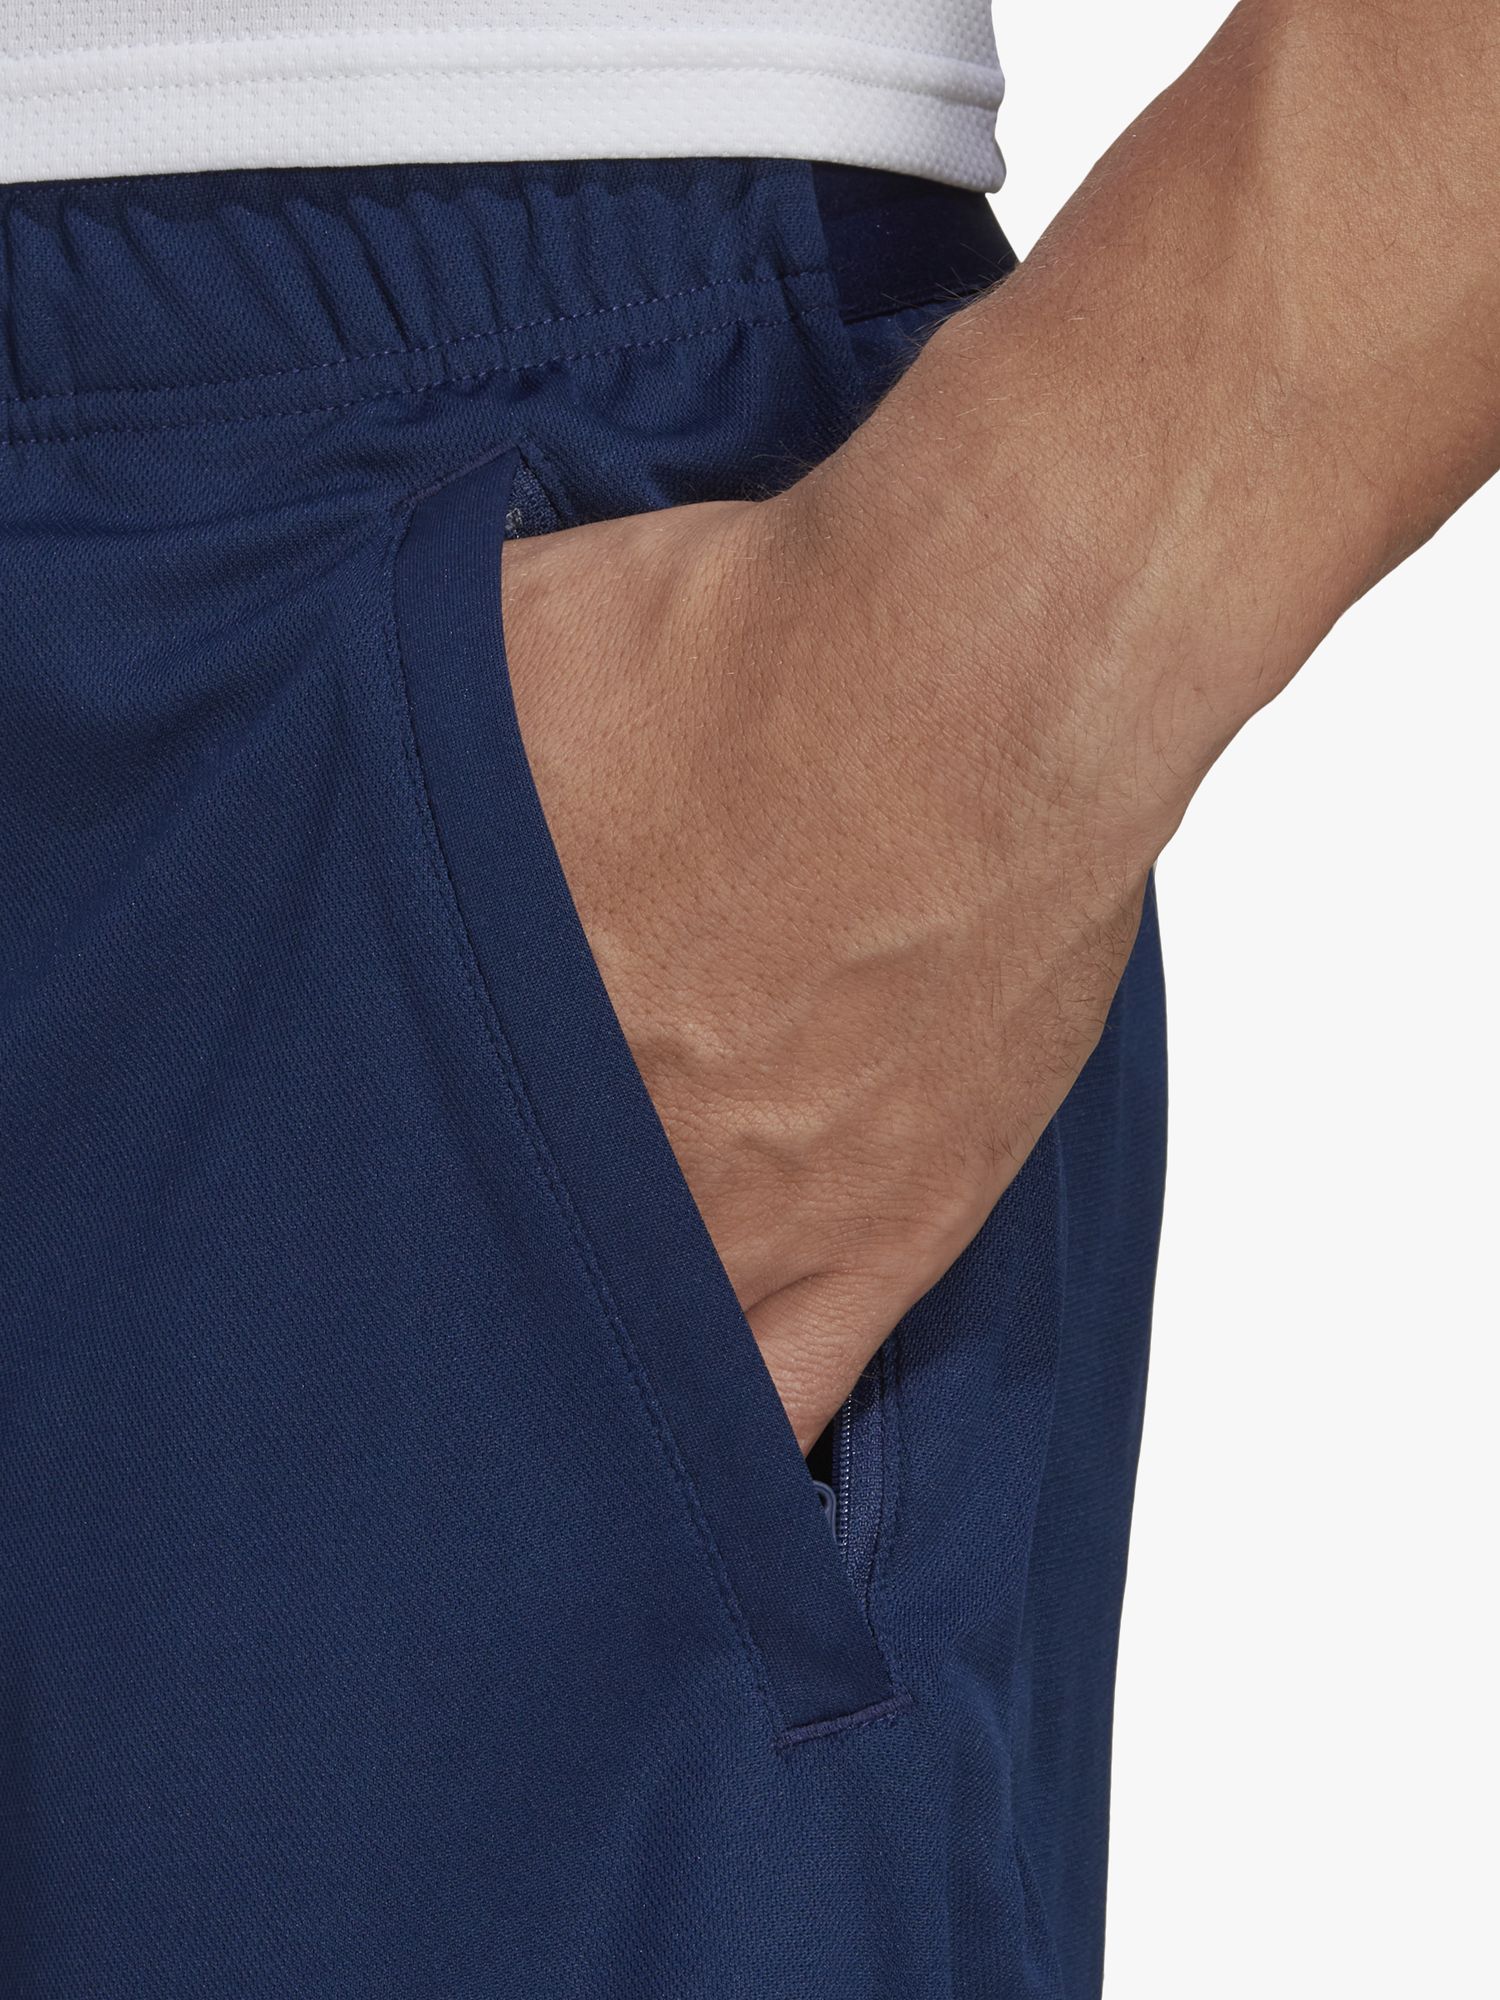 adidas AEROREADY Train Essentials Logo Gym Shorts, Dark Blue/White, S